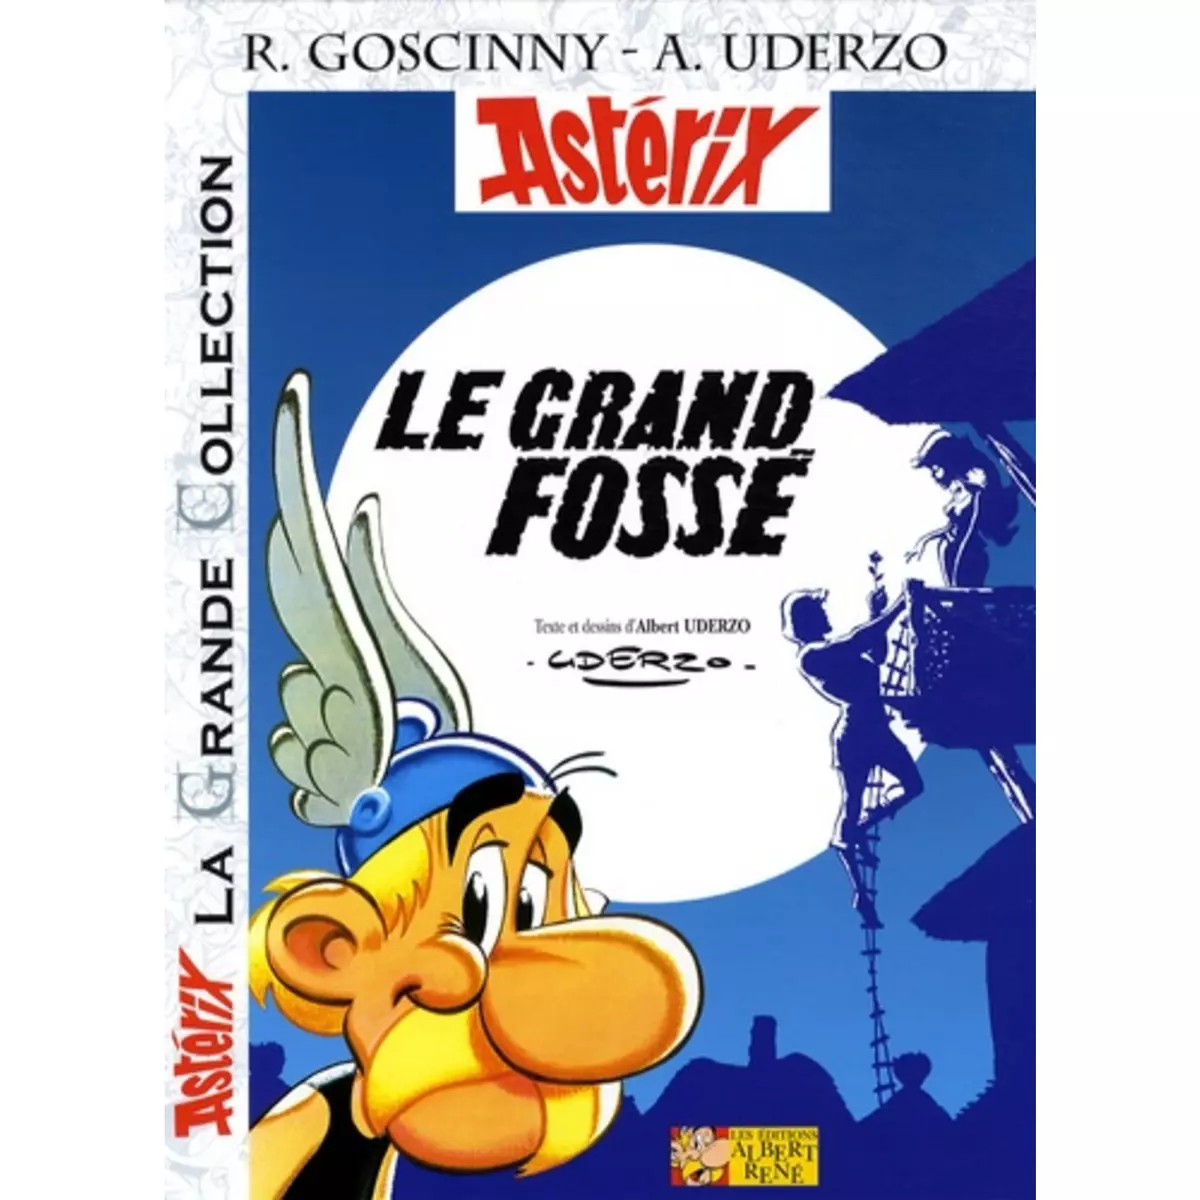  ASTERIX TOME 25 : LE GRAND FOSSE, Goscinny René